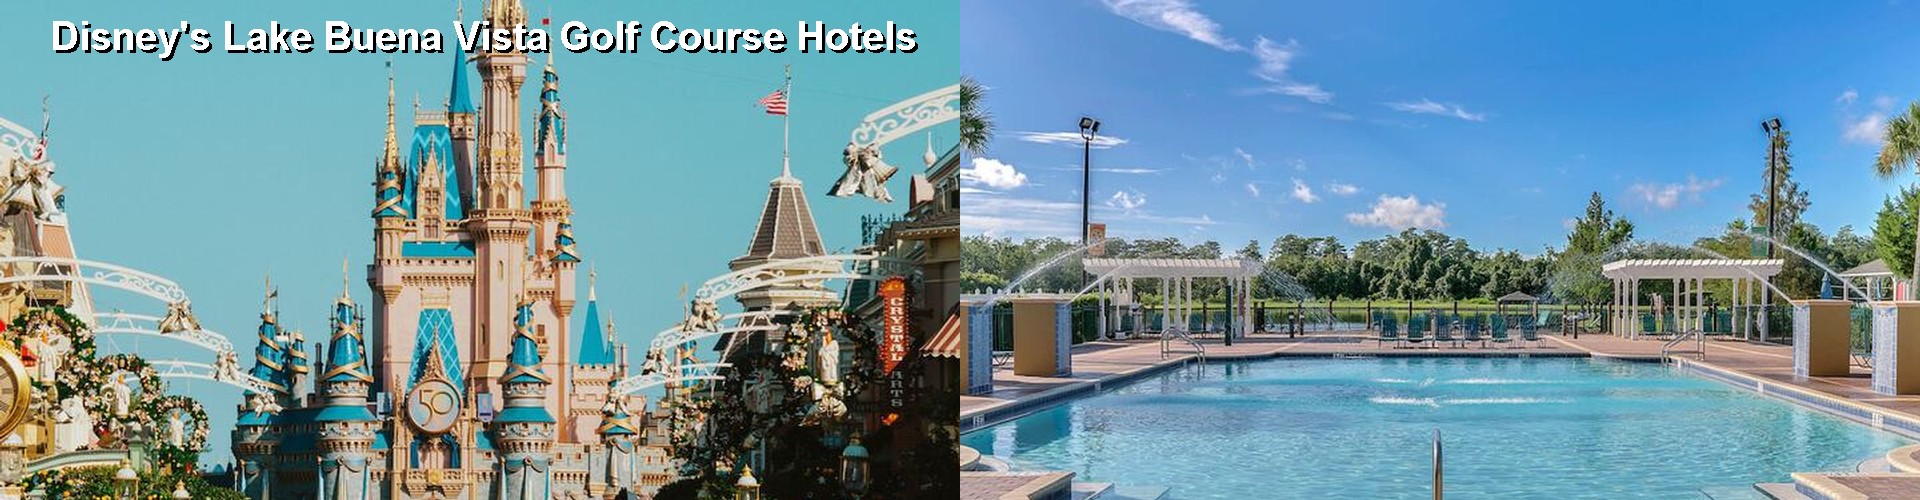 5 Best Hotels near Disney's Lake Buena Vista Golf Course